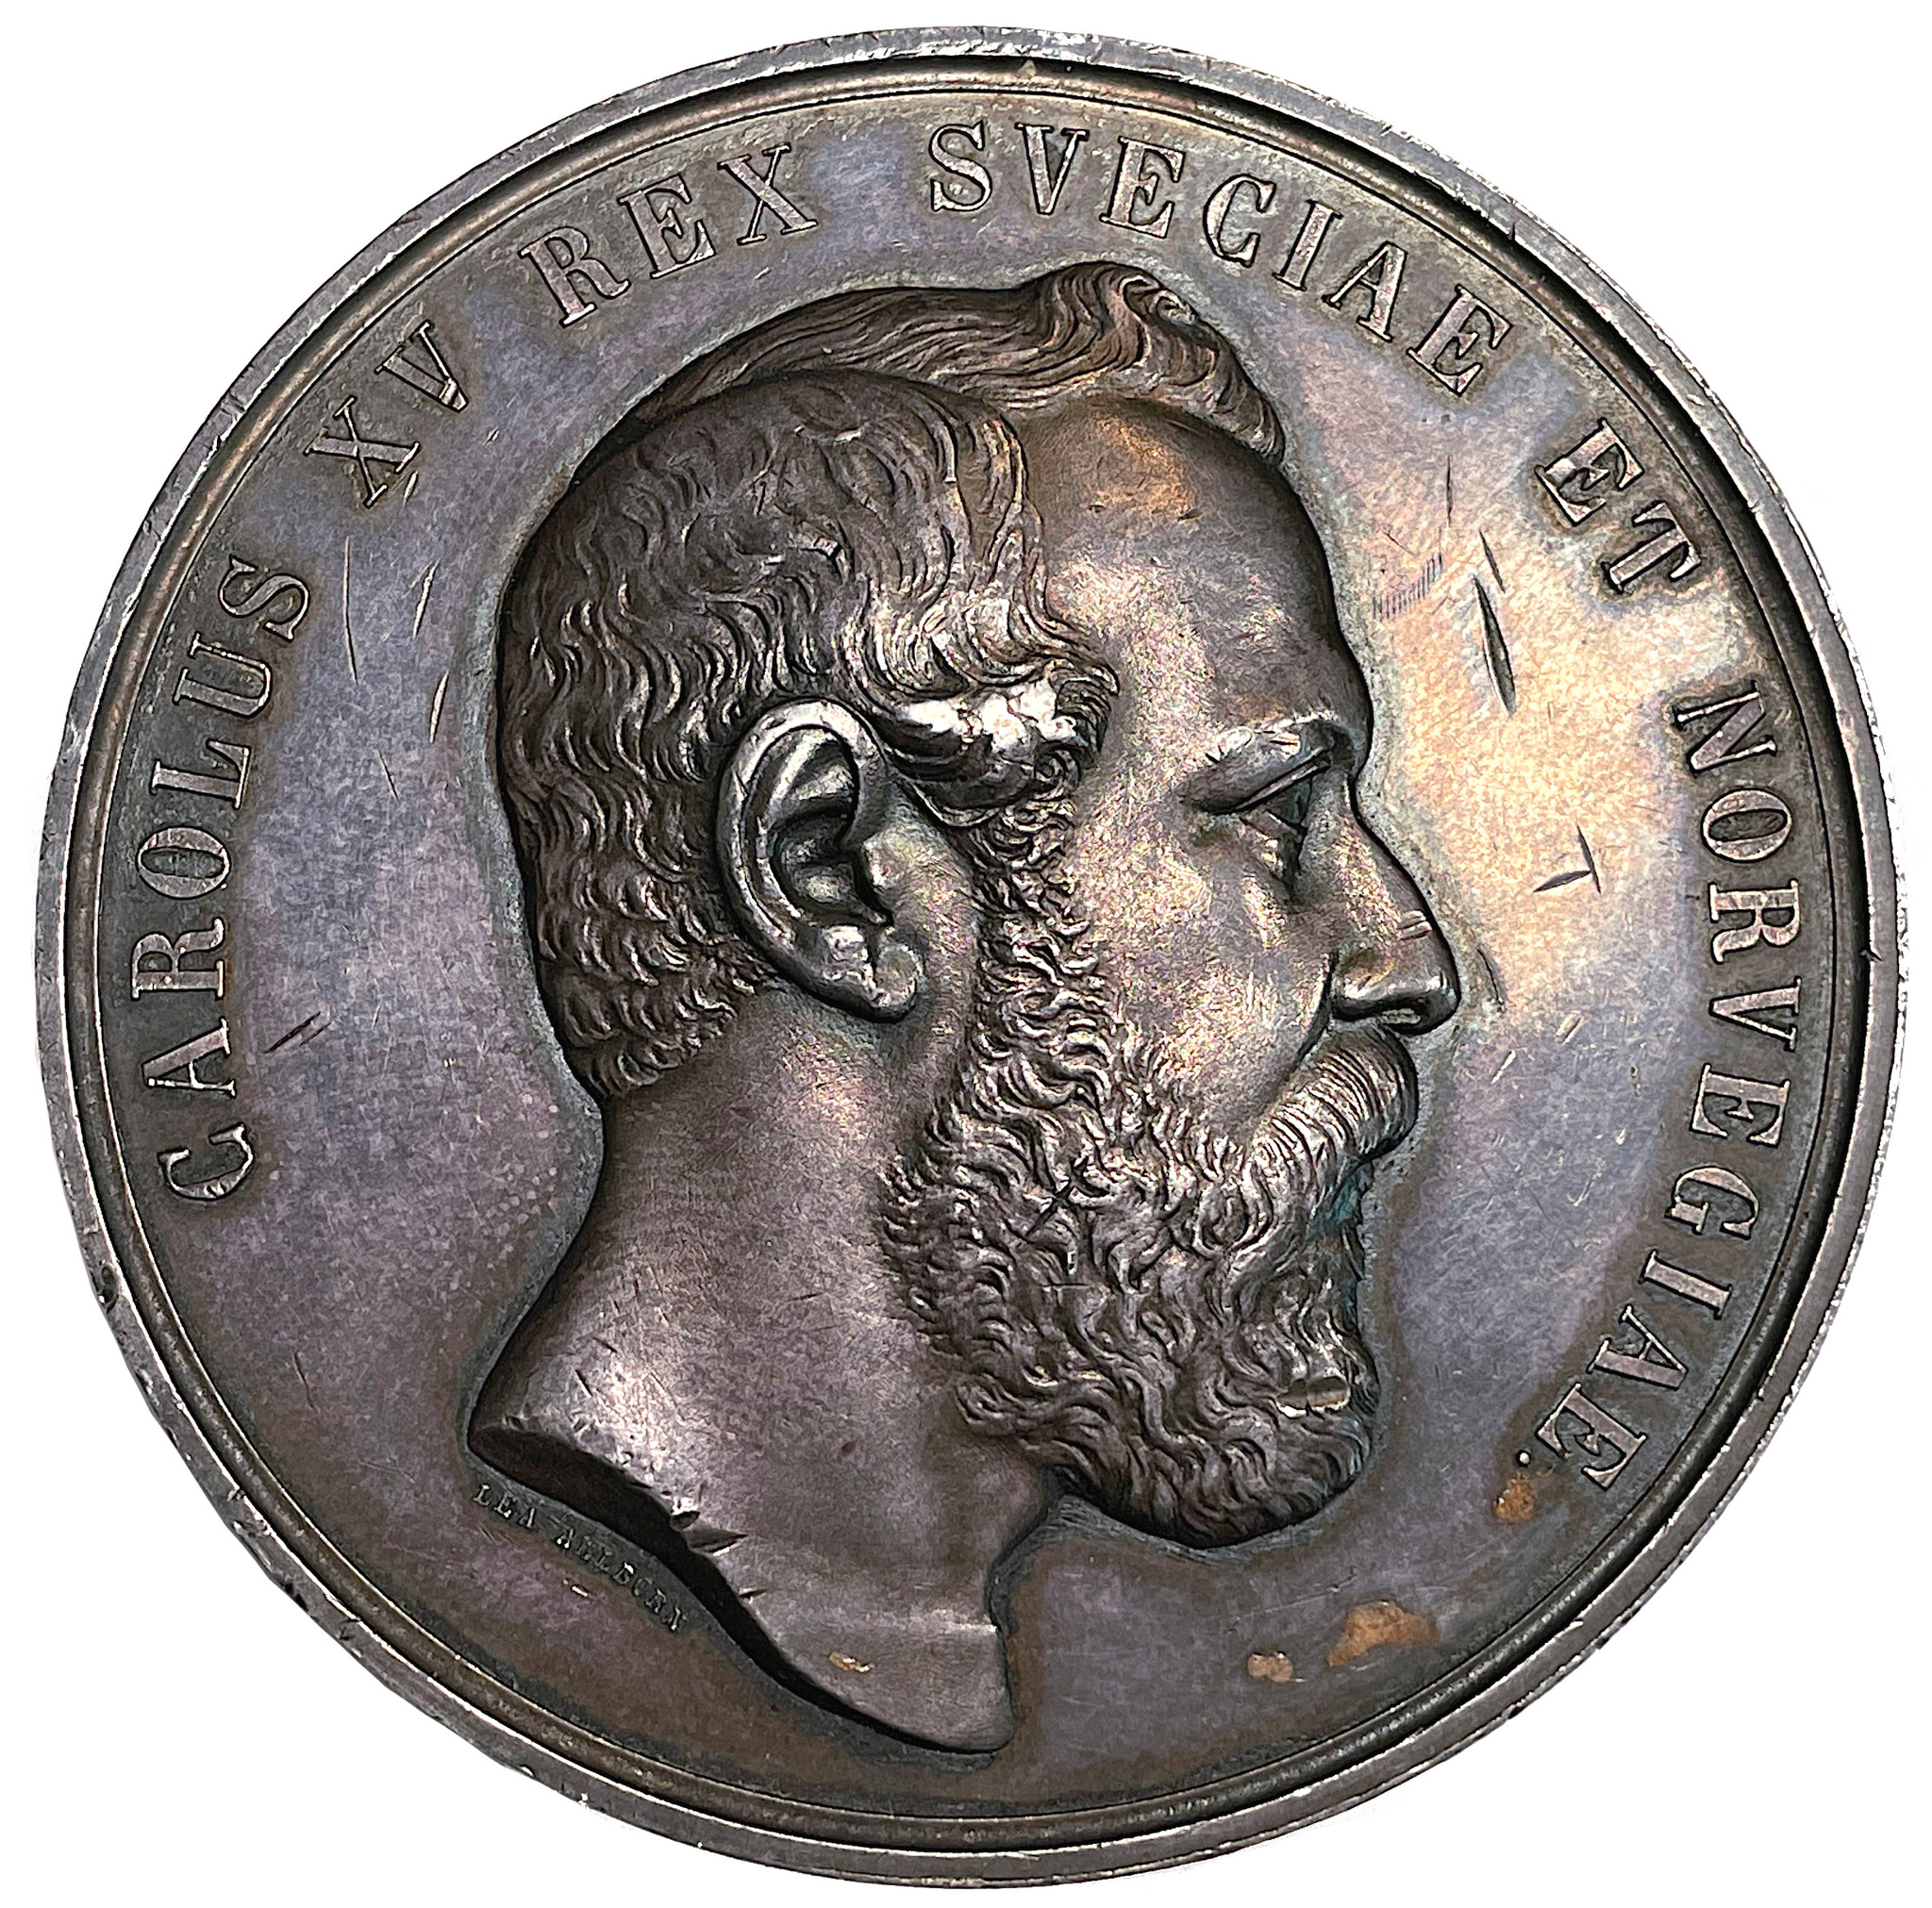 Sverige, Karl XV - Konungens död 1872 - Ett vackert exemplar av en pampig medalj utgiven med anledning av konung Karl XV:s död 18 september 1872 av Lea Ahlborn